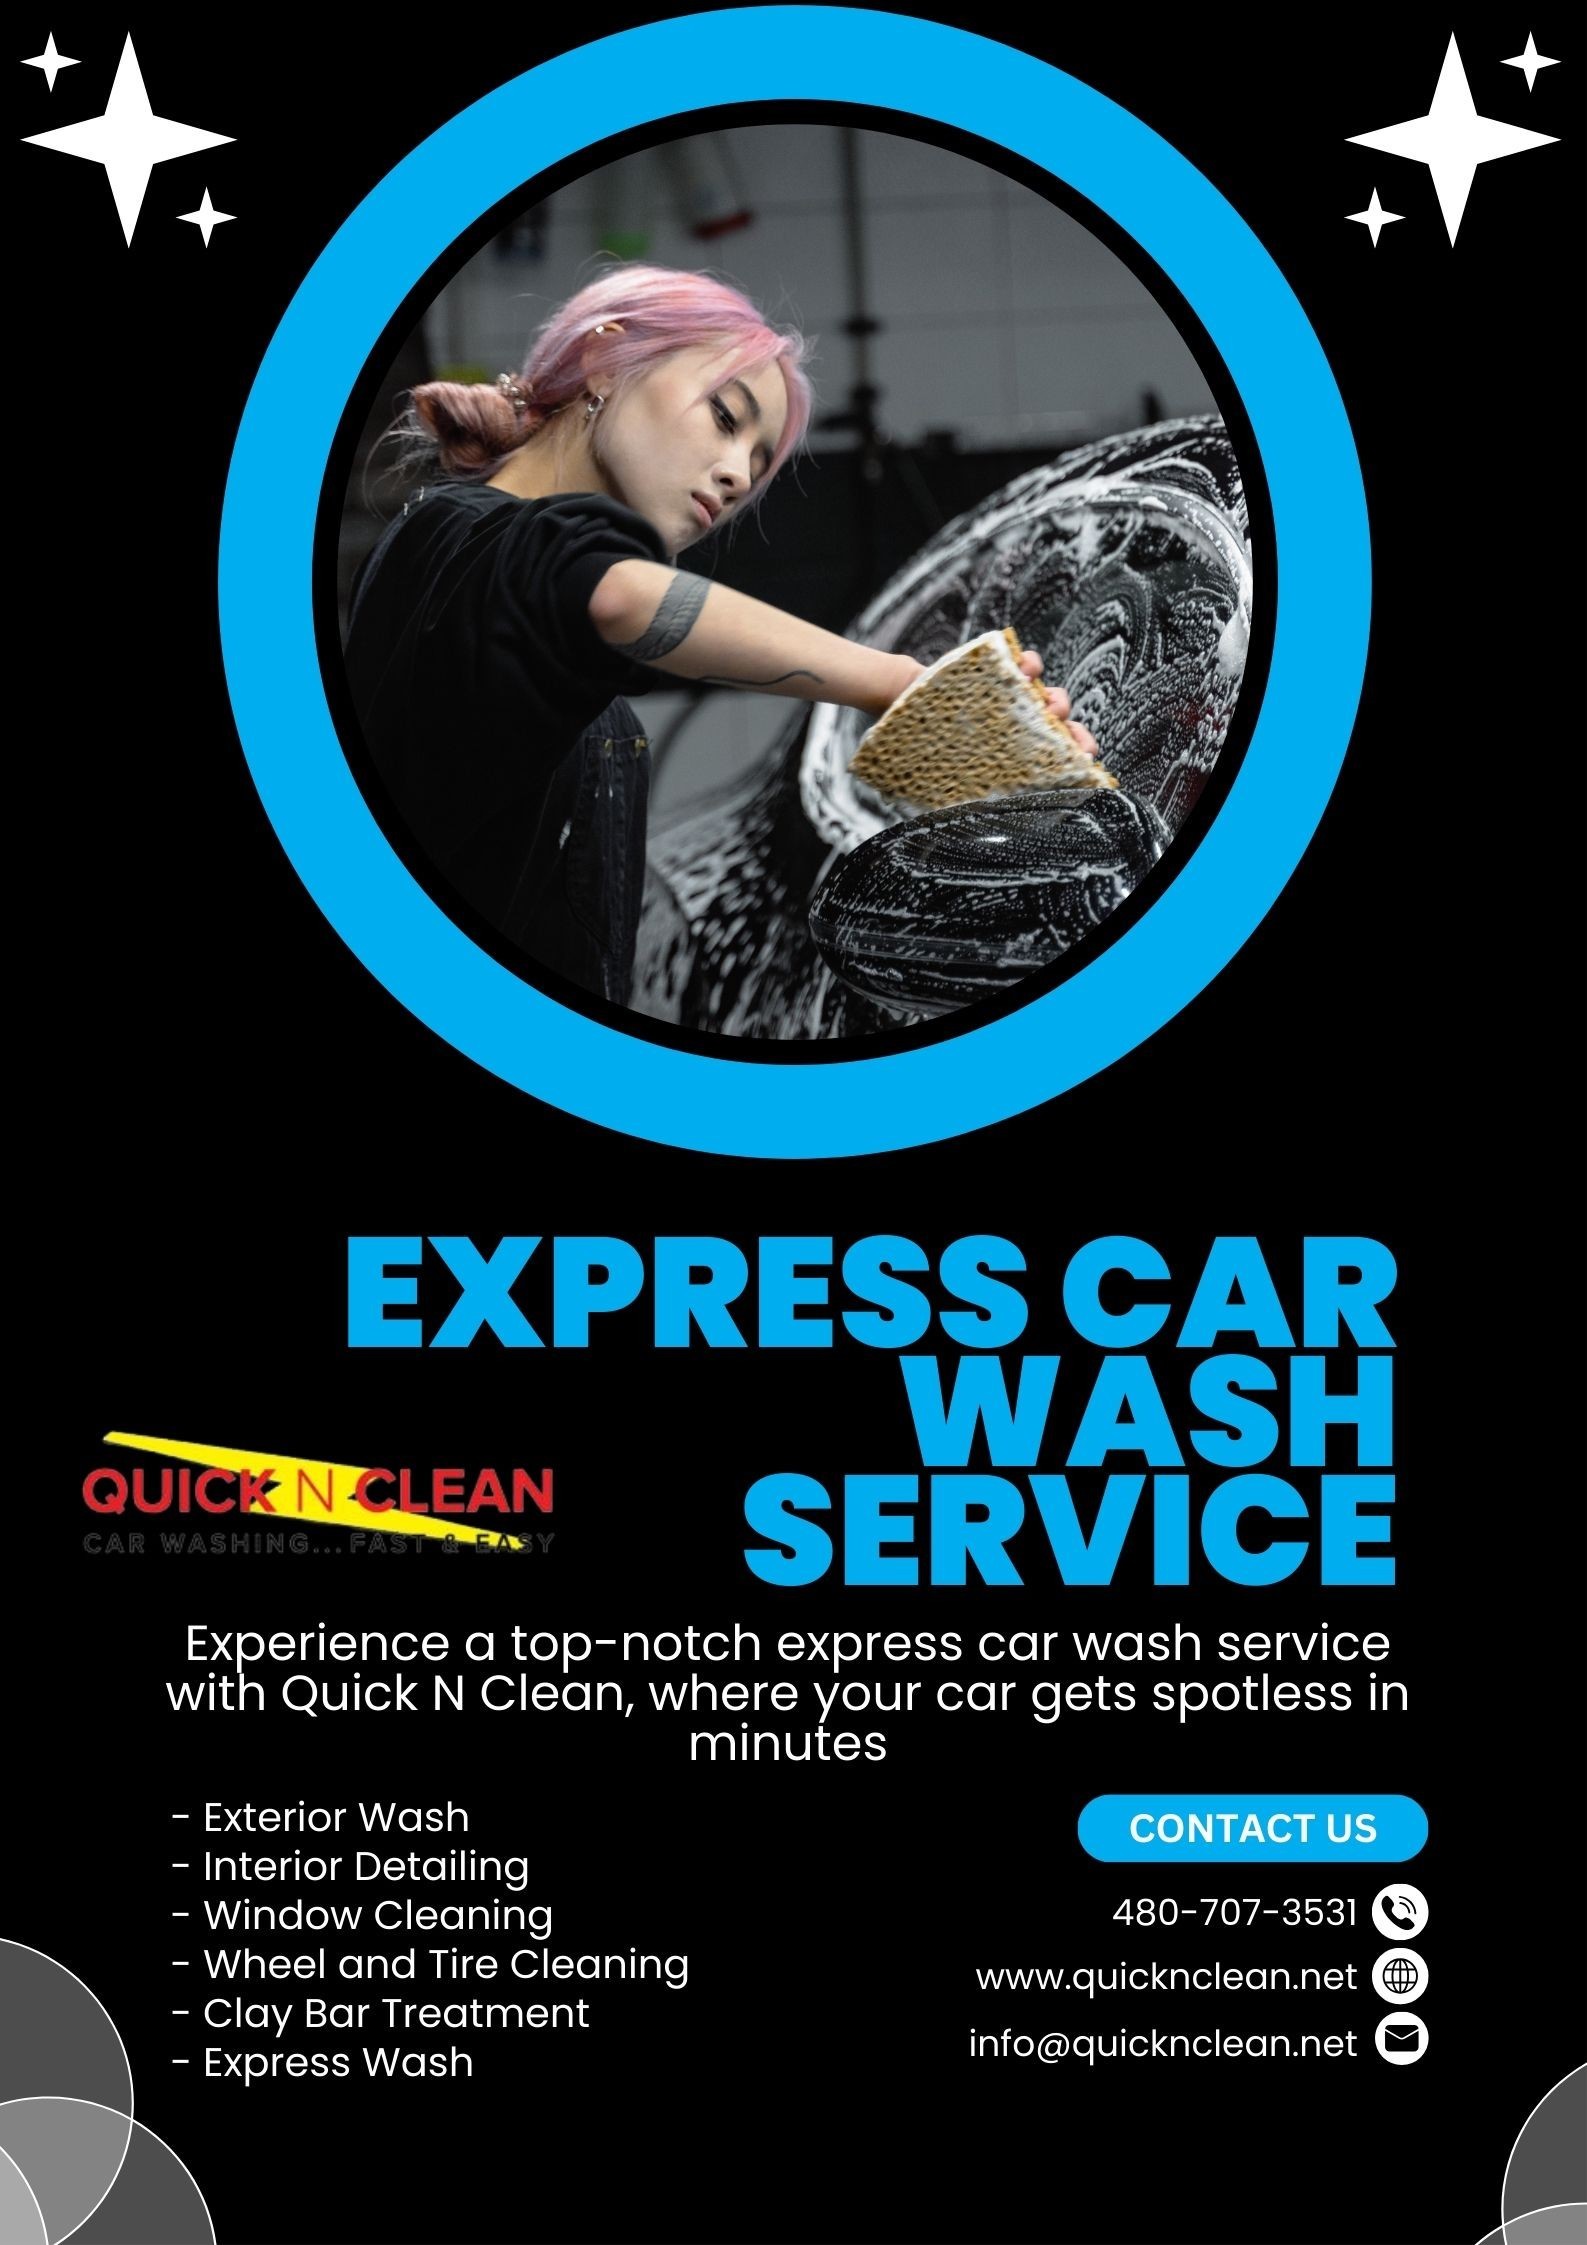 Express Car Wash Service - www.quicknclean.net